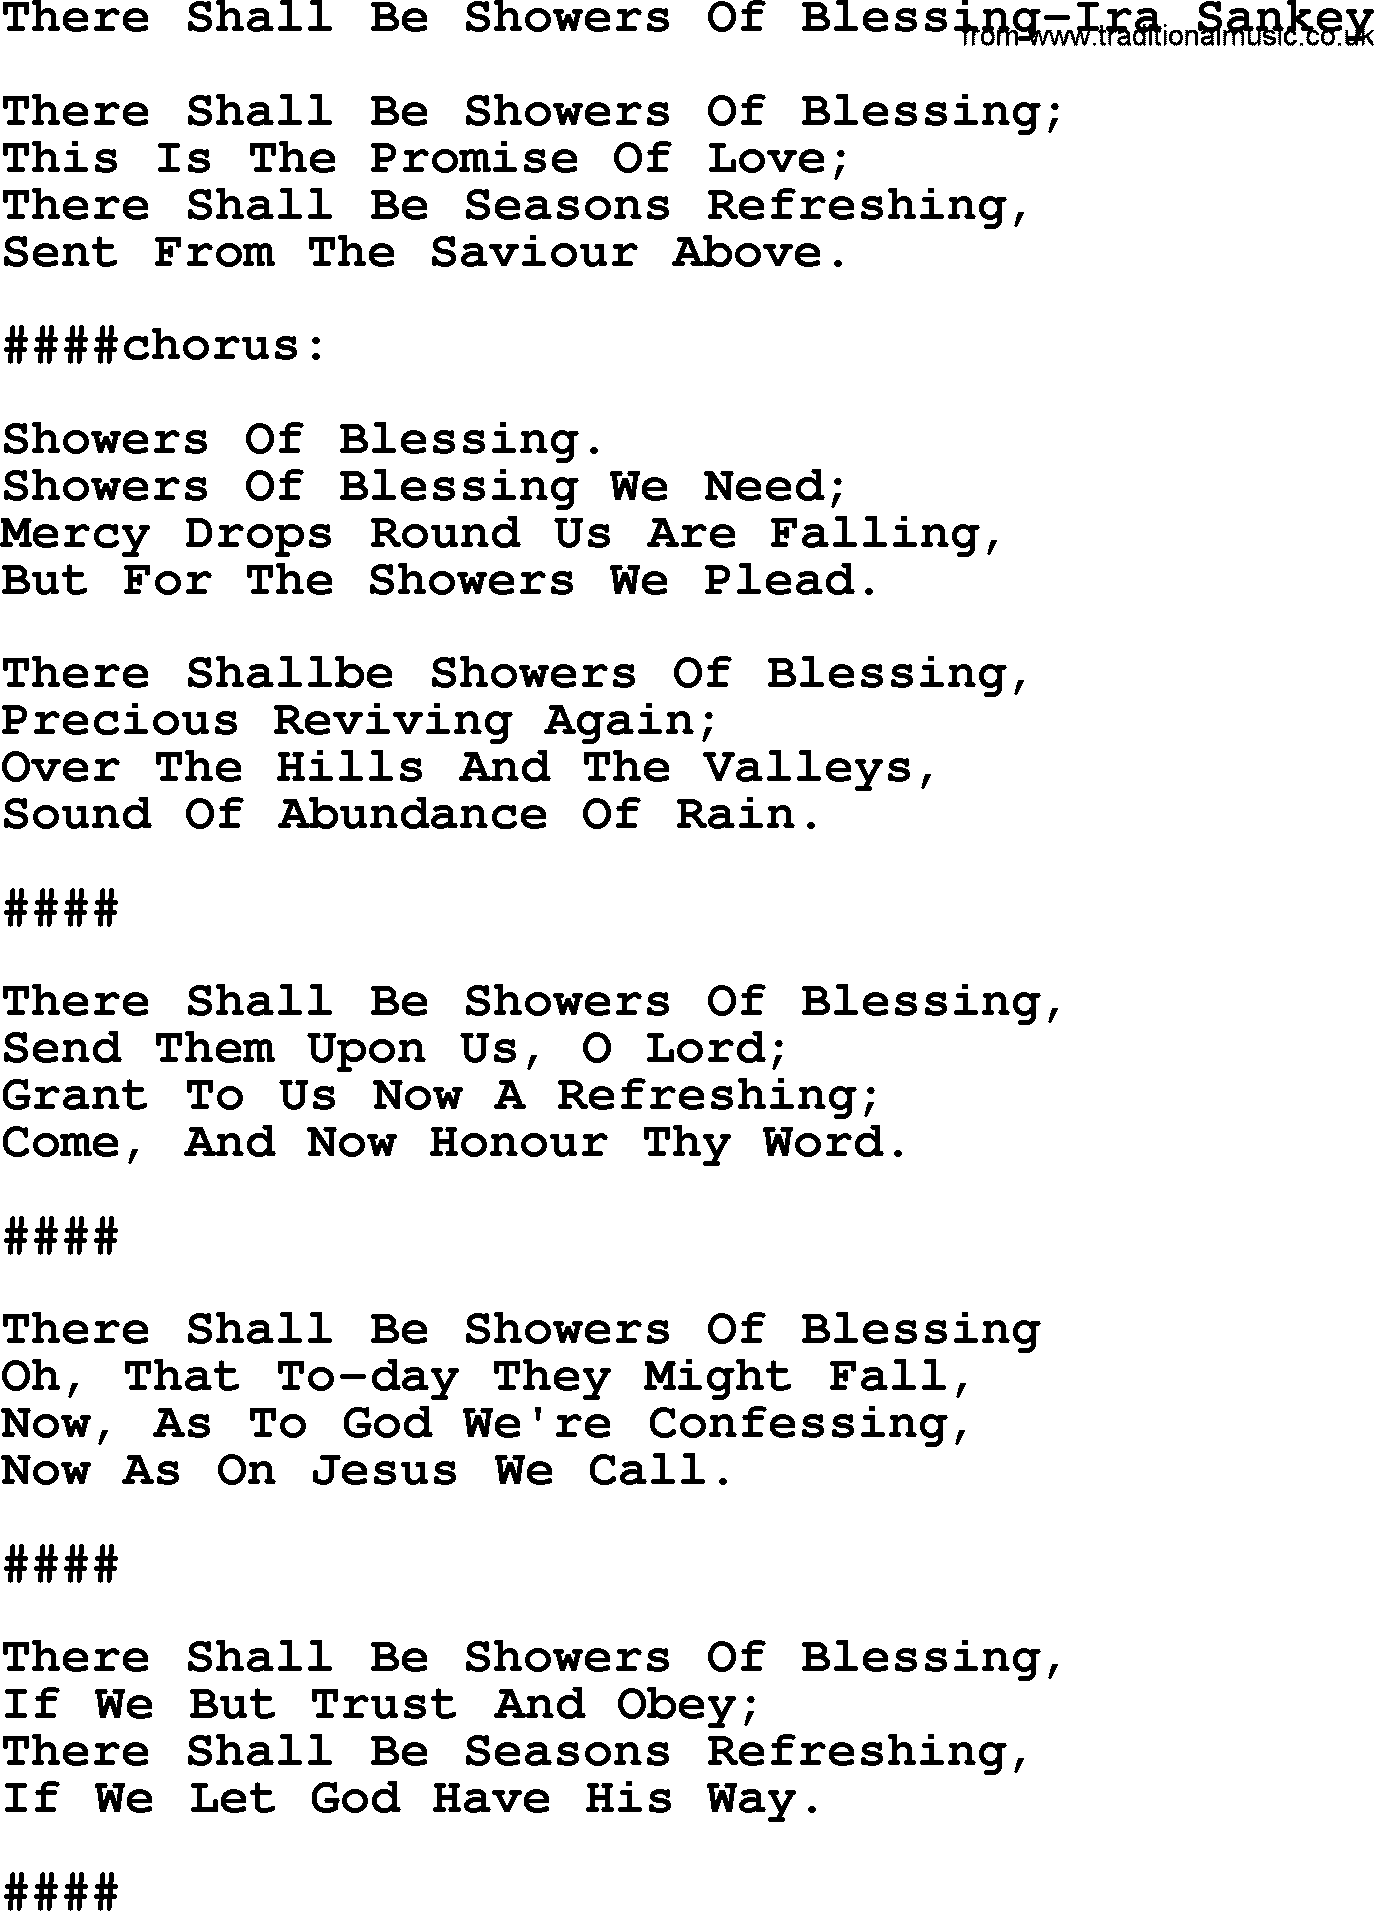 Ira Sankey hymn: There Shall Be Showers Of Blessing-Ira Sankey, lyrics